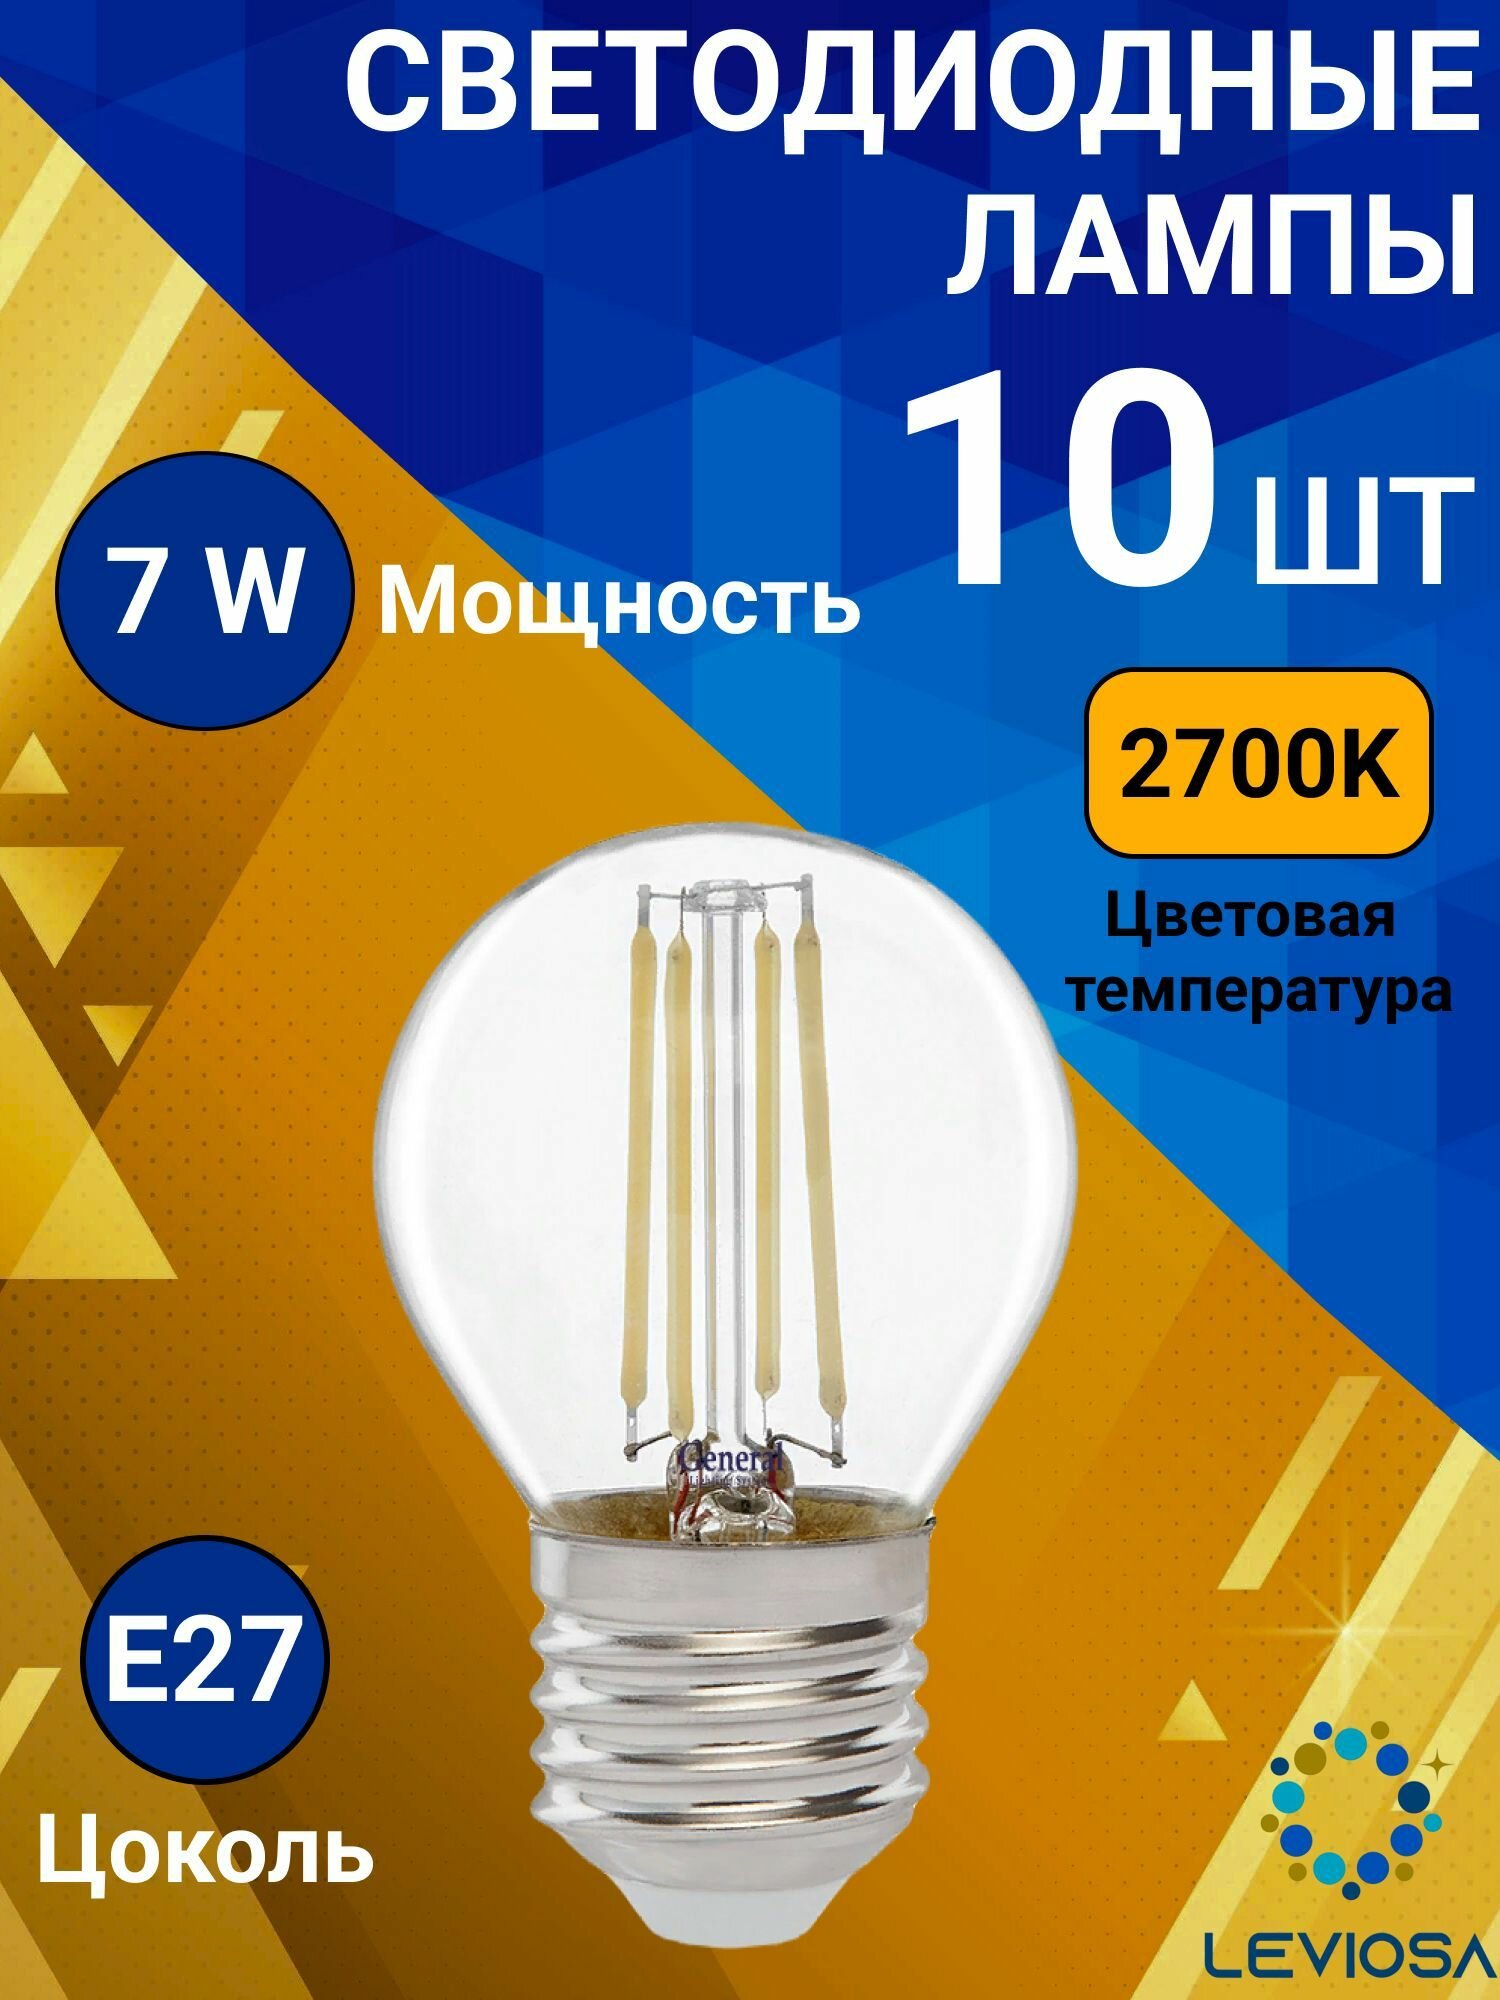 General, Лампа светодиодная филаментная, Комплект из 10 шт, 7 Вт, Цоколь E27, 2700К, Форма лампы Шар